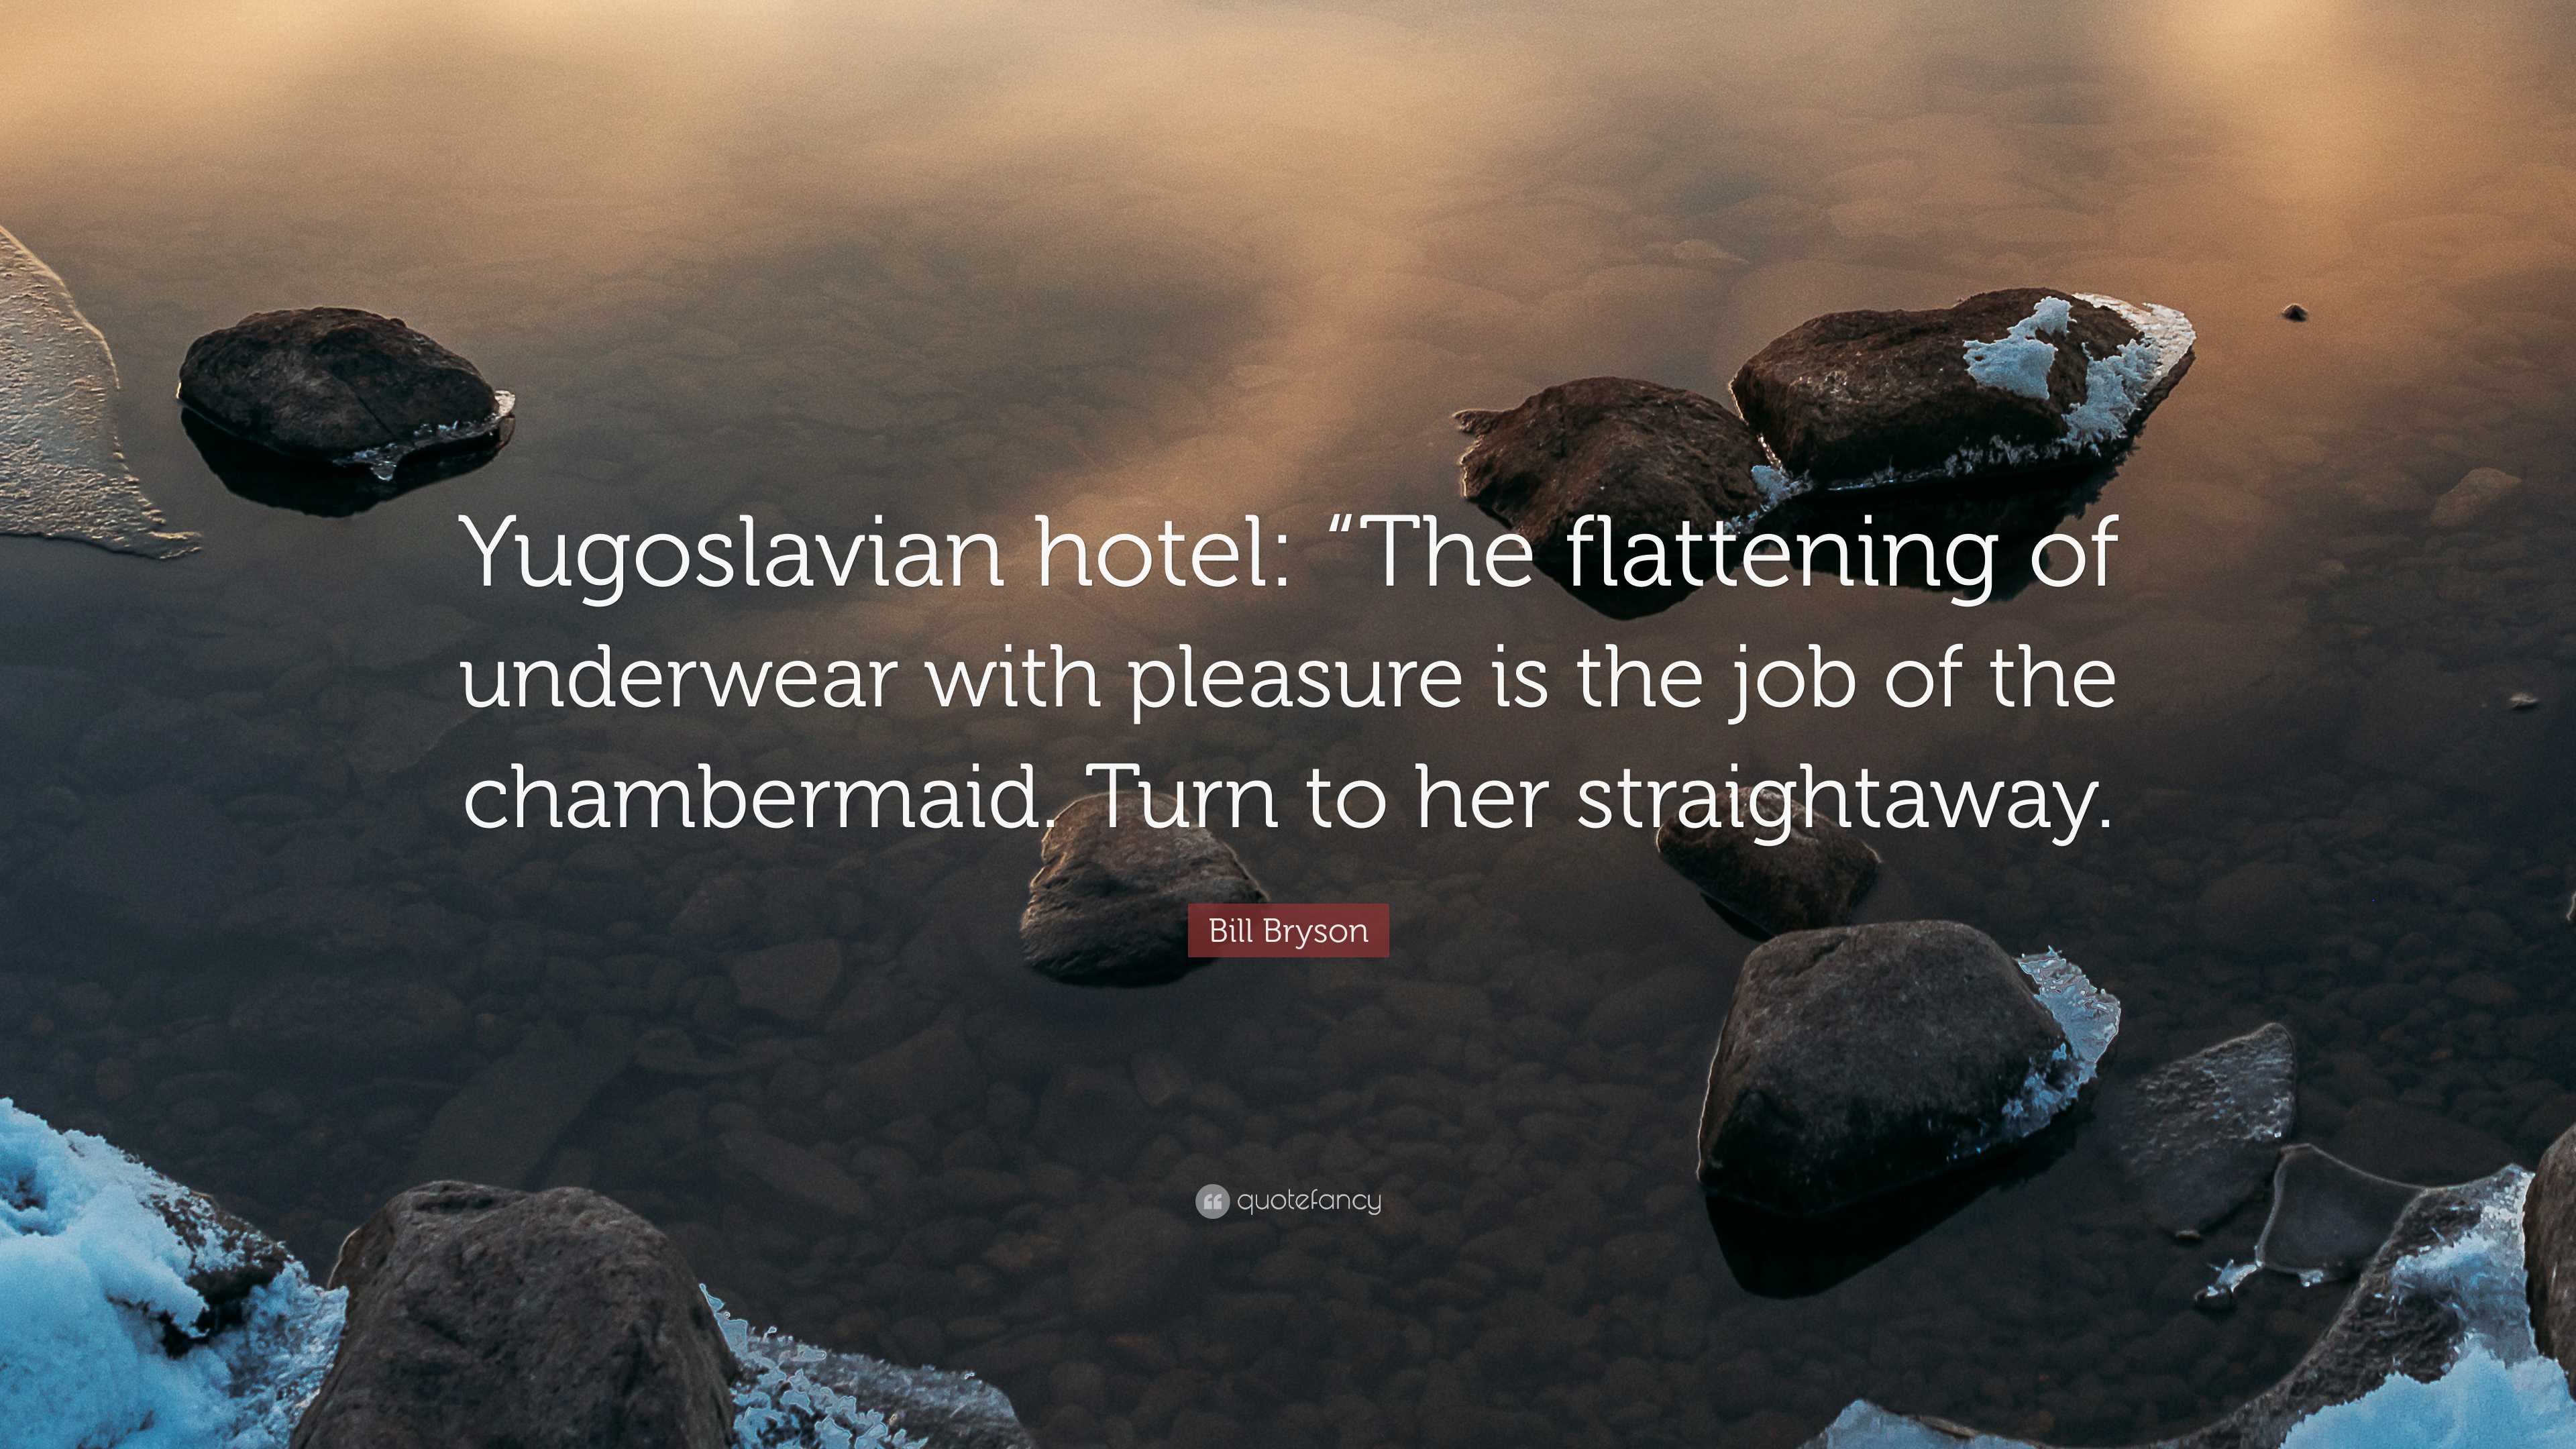 Bill Bryson Quote: “Yugoslavian hotel: “The flattening of